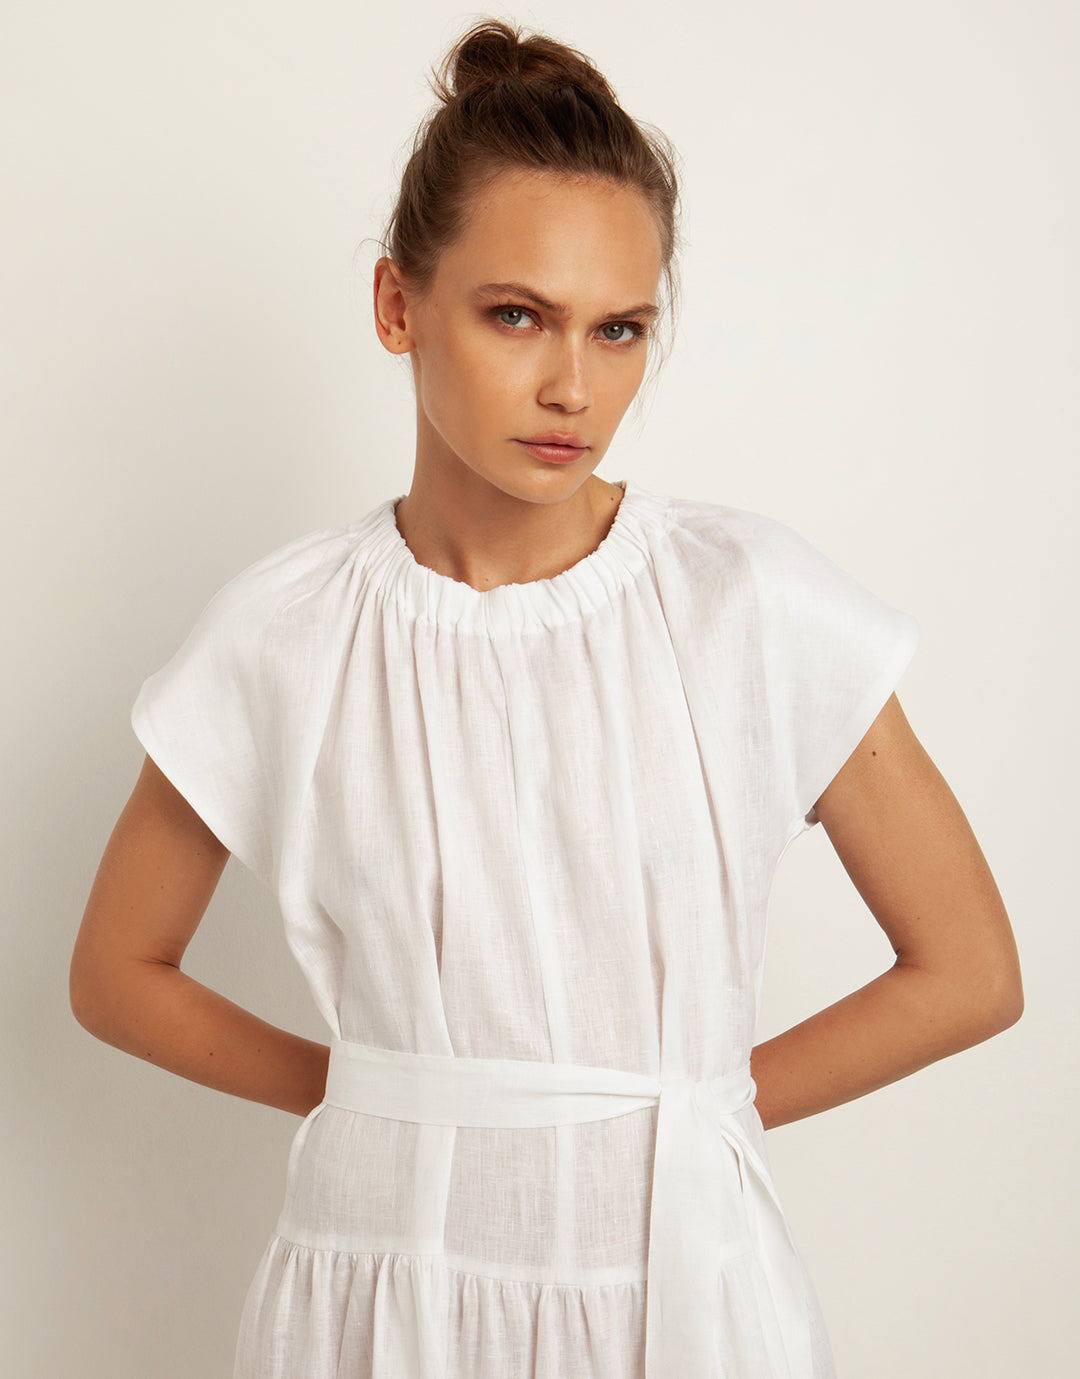 Minimal Midi Dress - White - Simply Beach UK